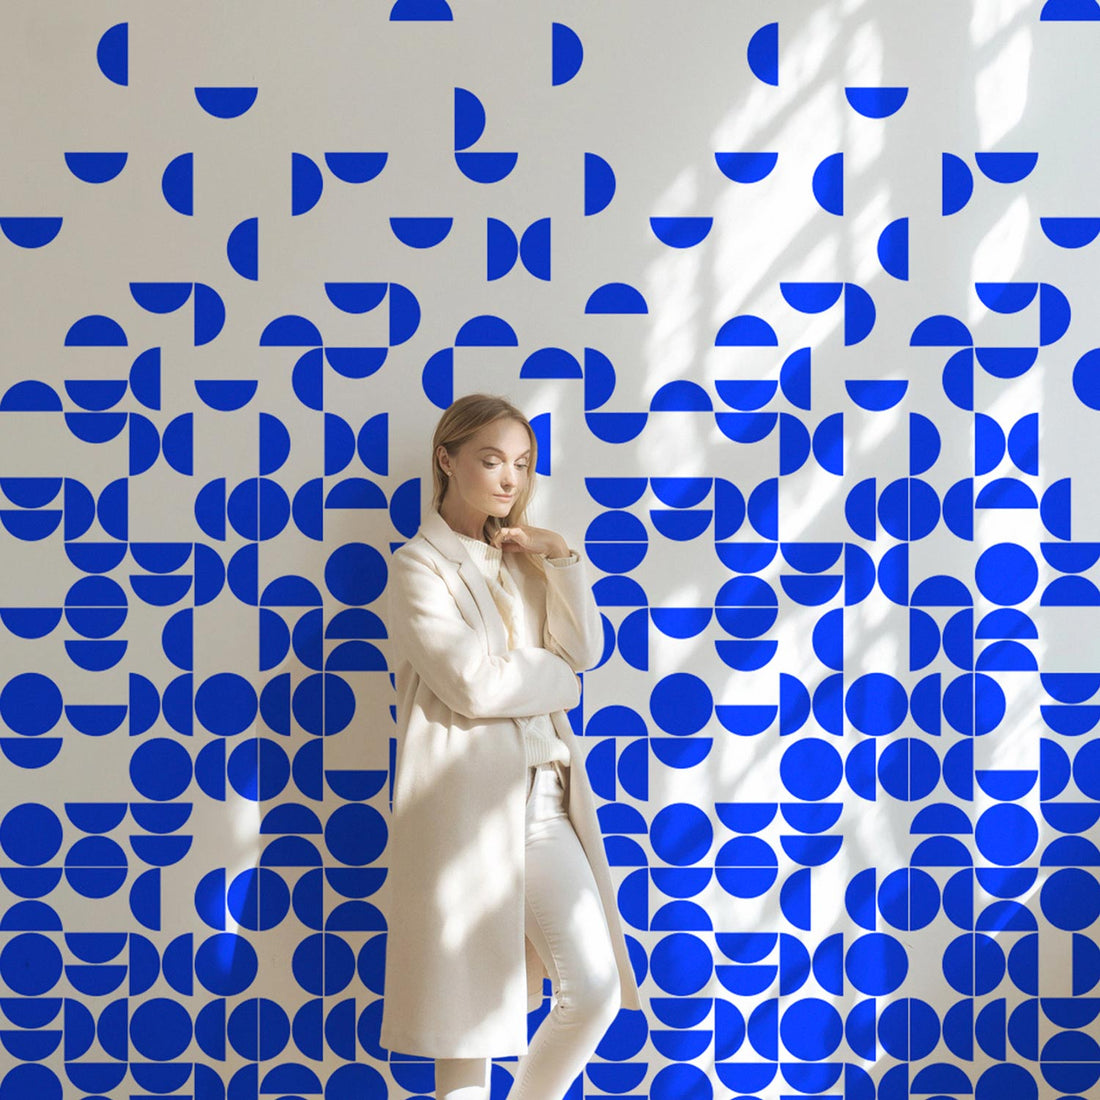 geometric circles print wall mural design in bright blue color